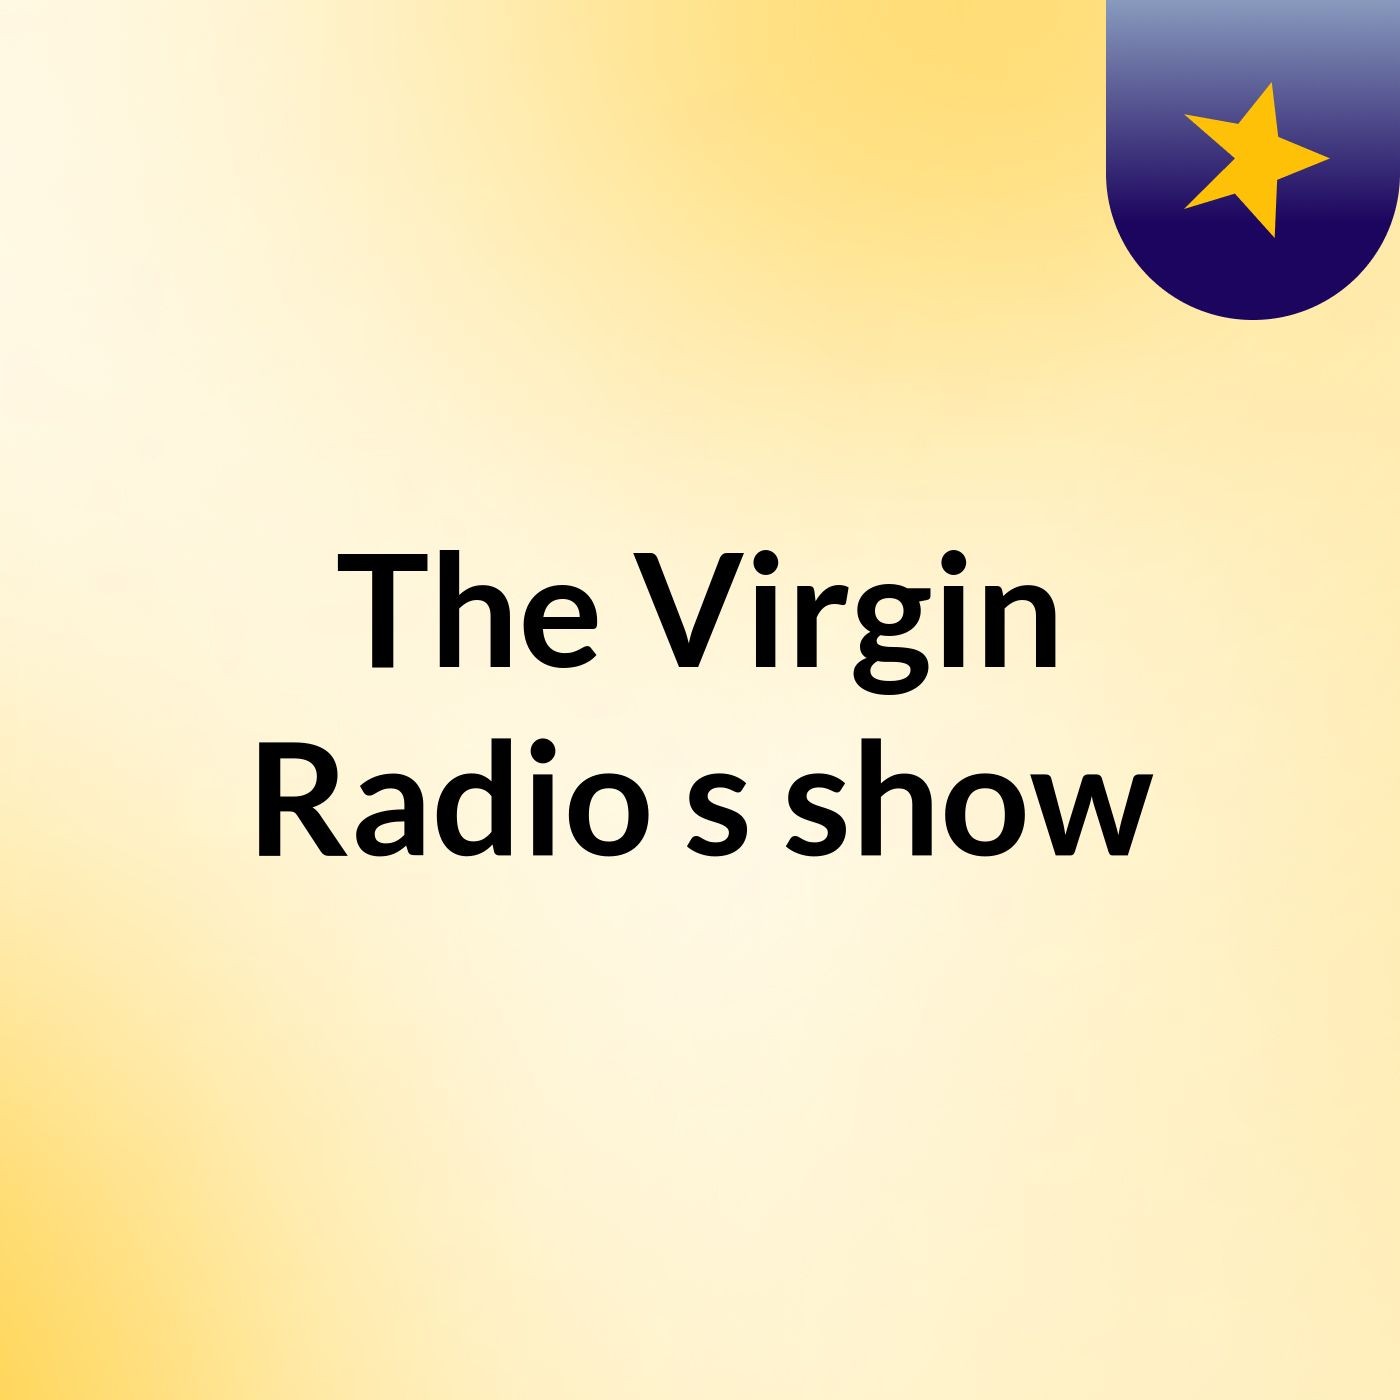 The Virgin Radio's show